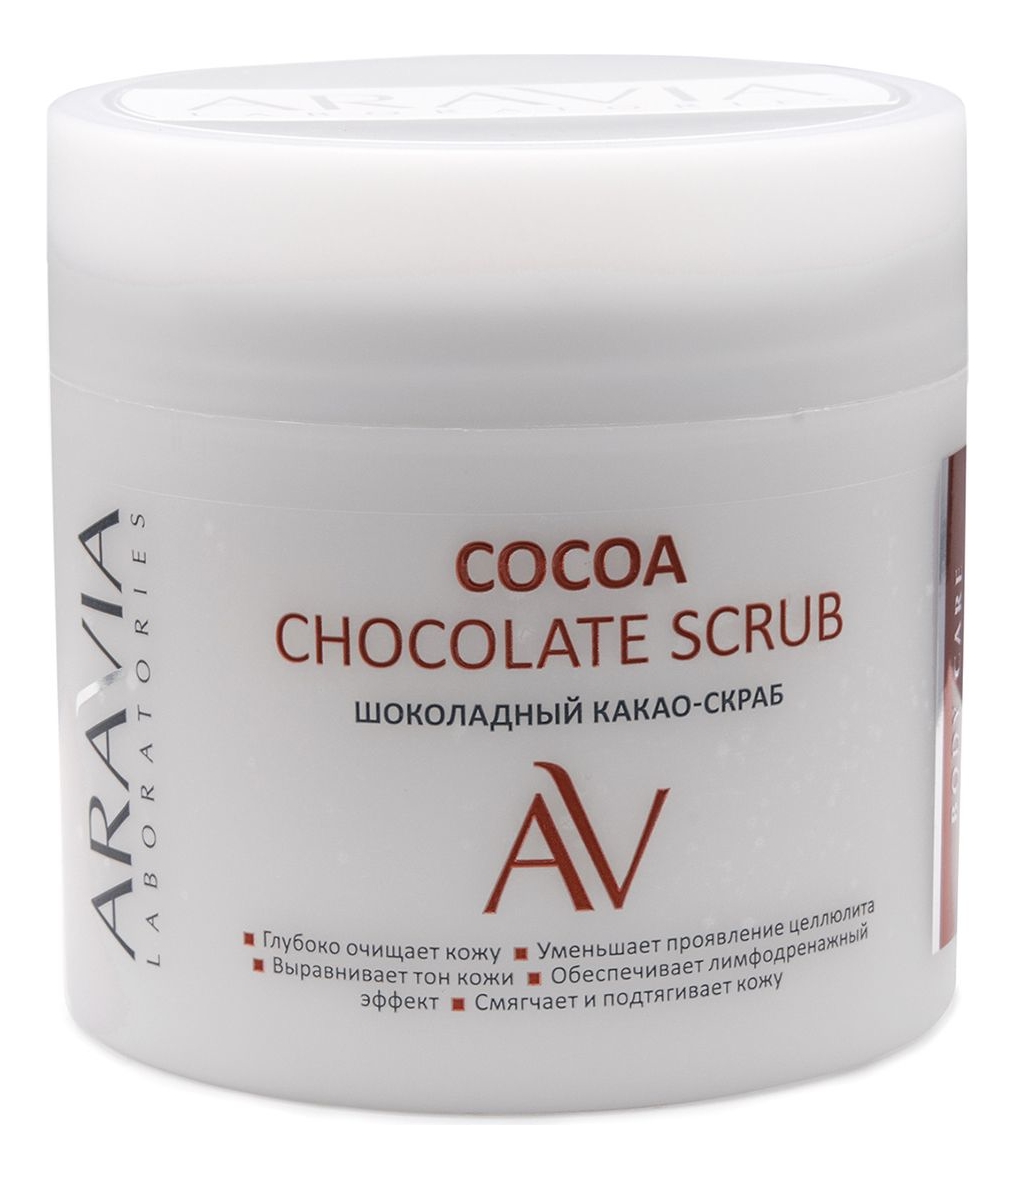 Шоколадный какао-скраб для тела Cocoa Chocolate Scrub 300мл шоколадный какао скраб для тела cocoa chockolate scrub 300 мл